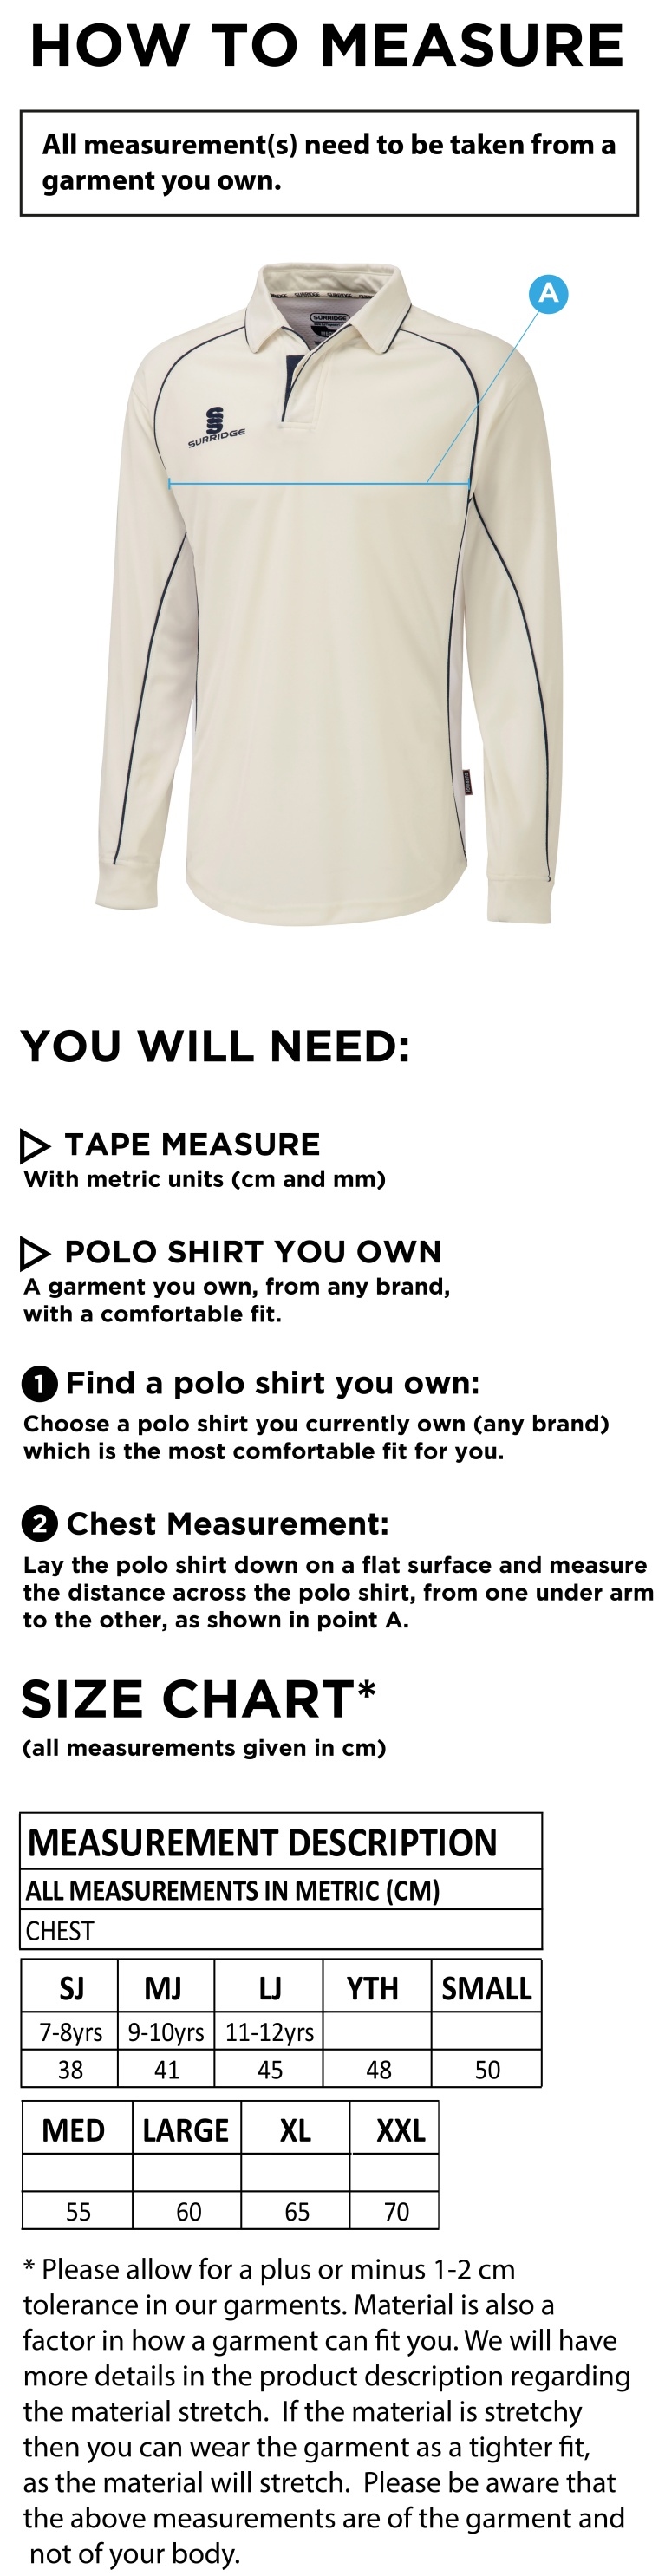 Little Munden CC - Premier Long Sleeve Shirt - Size Guide